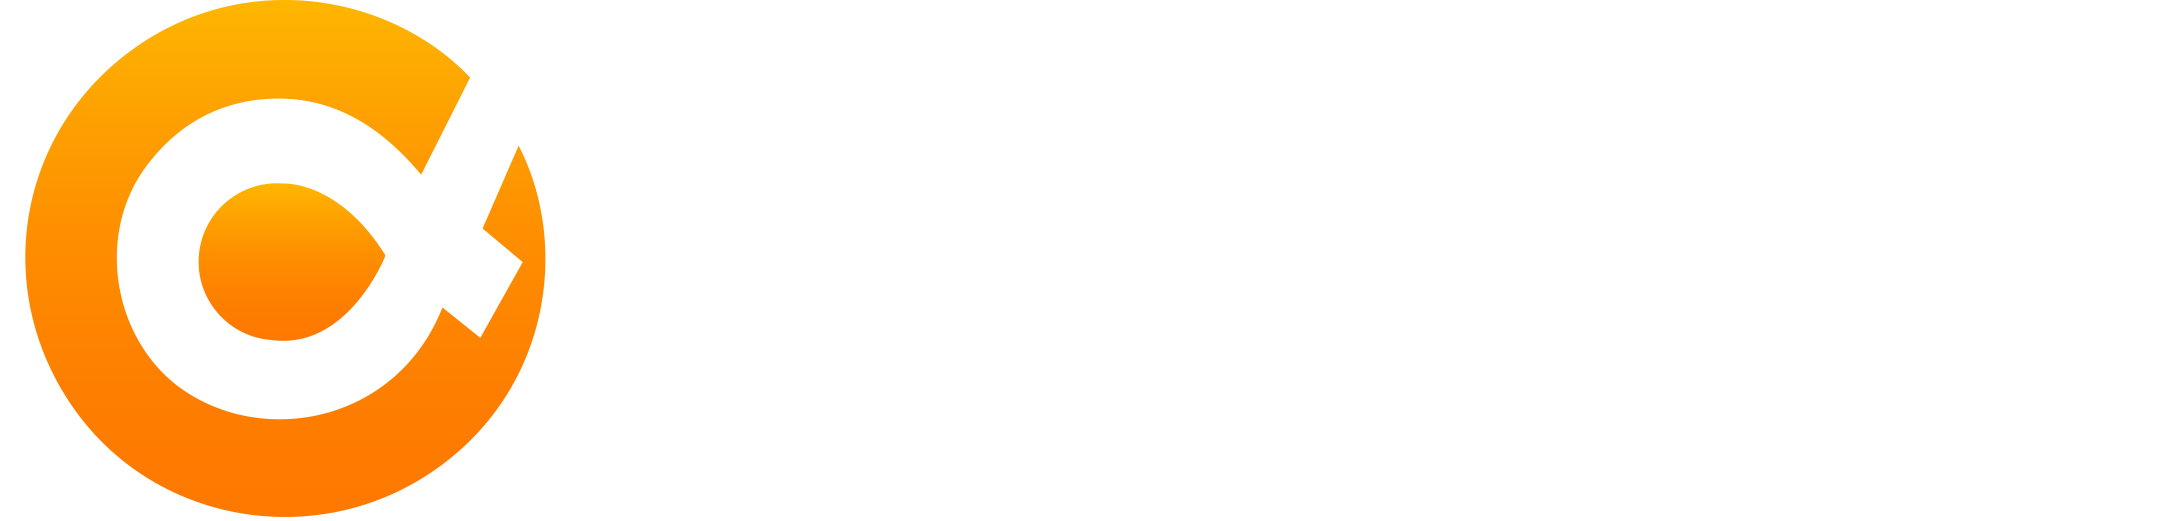 alpha88_v3